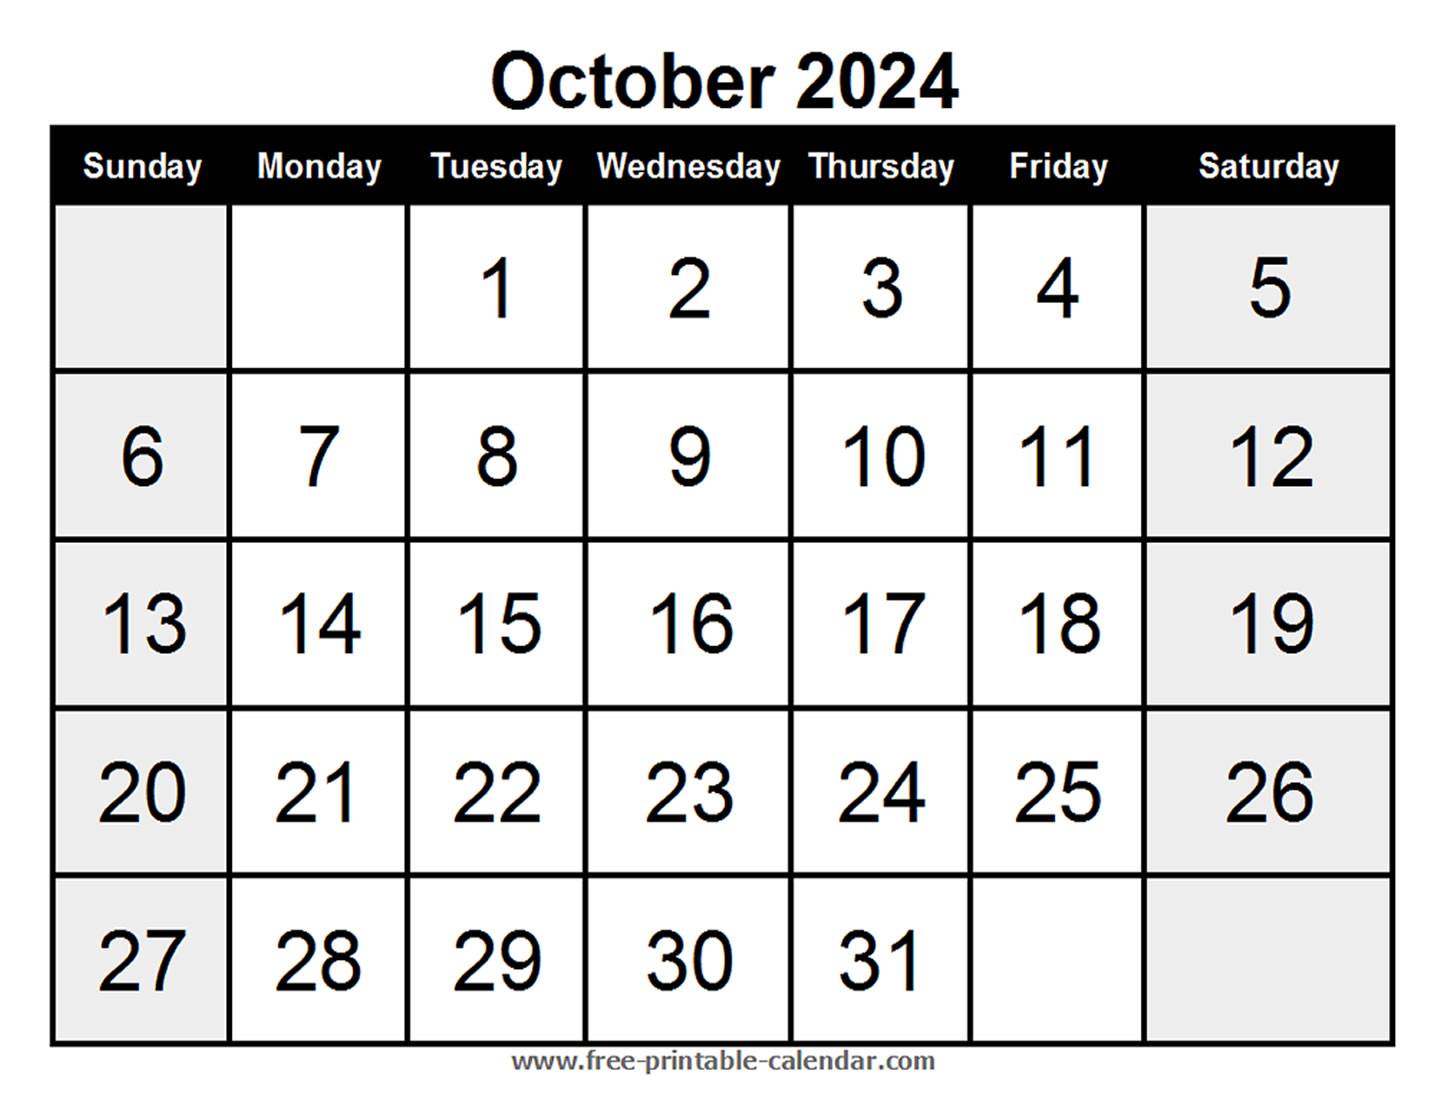 Blank Calendar October 2024 - Free-printable-calendar.com